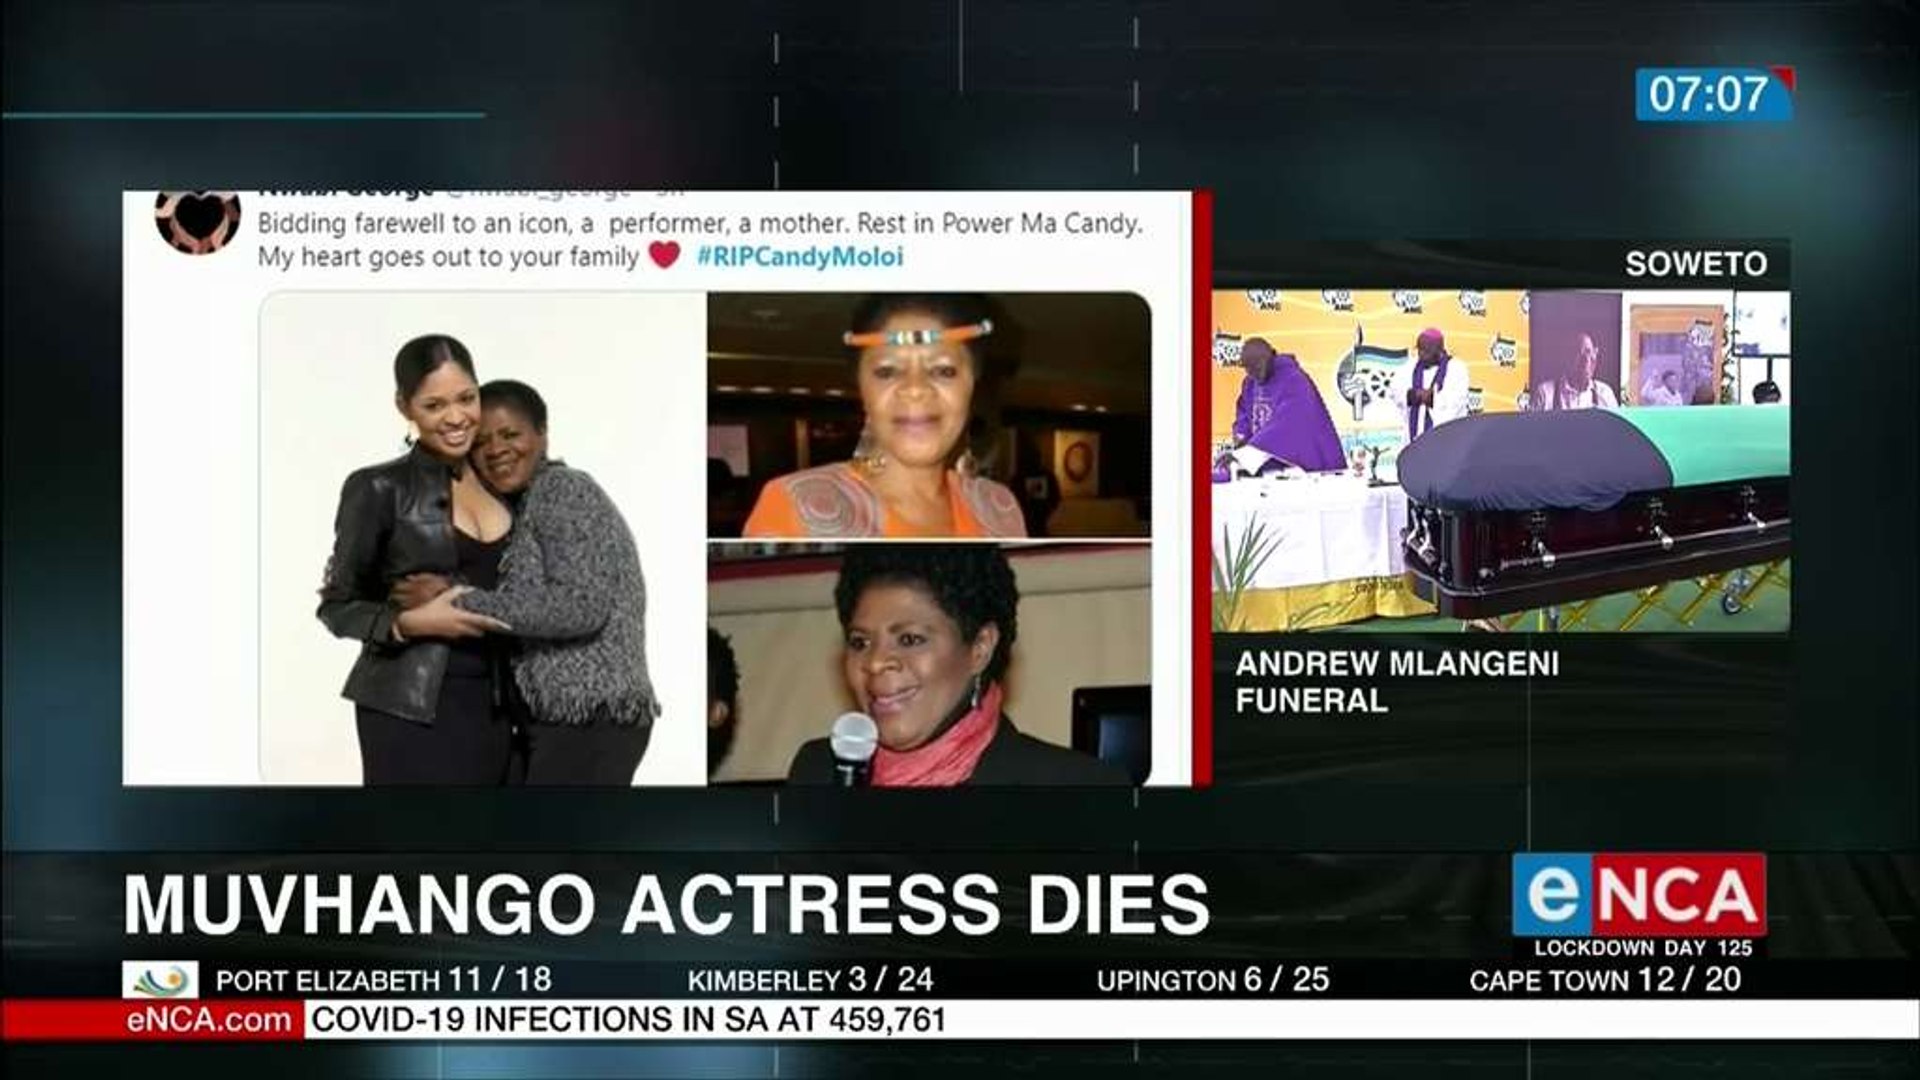 Muvhango actress dies